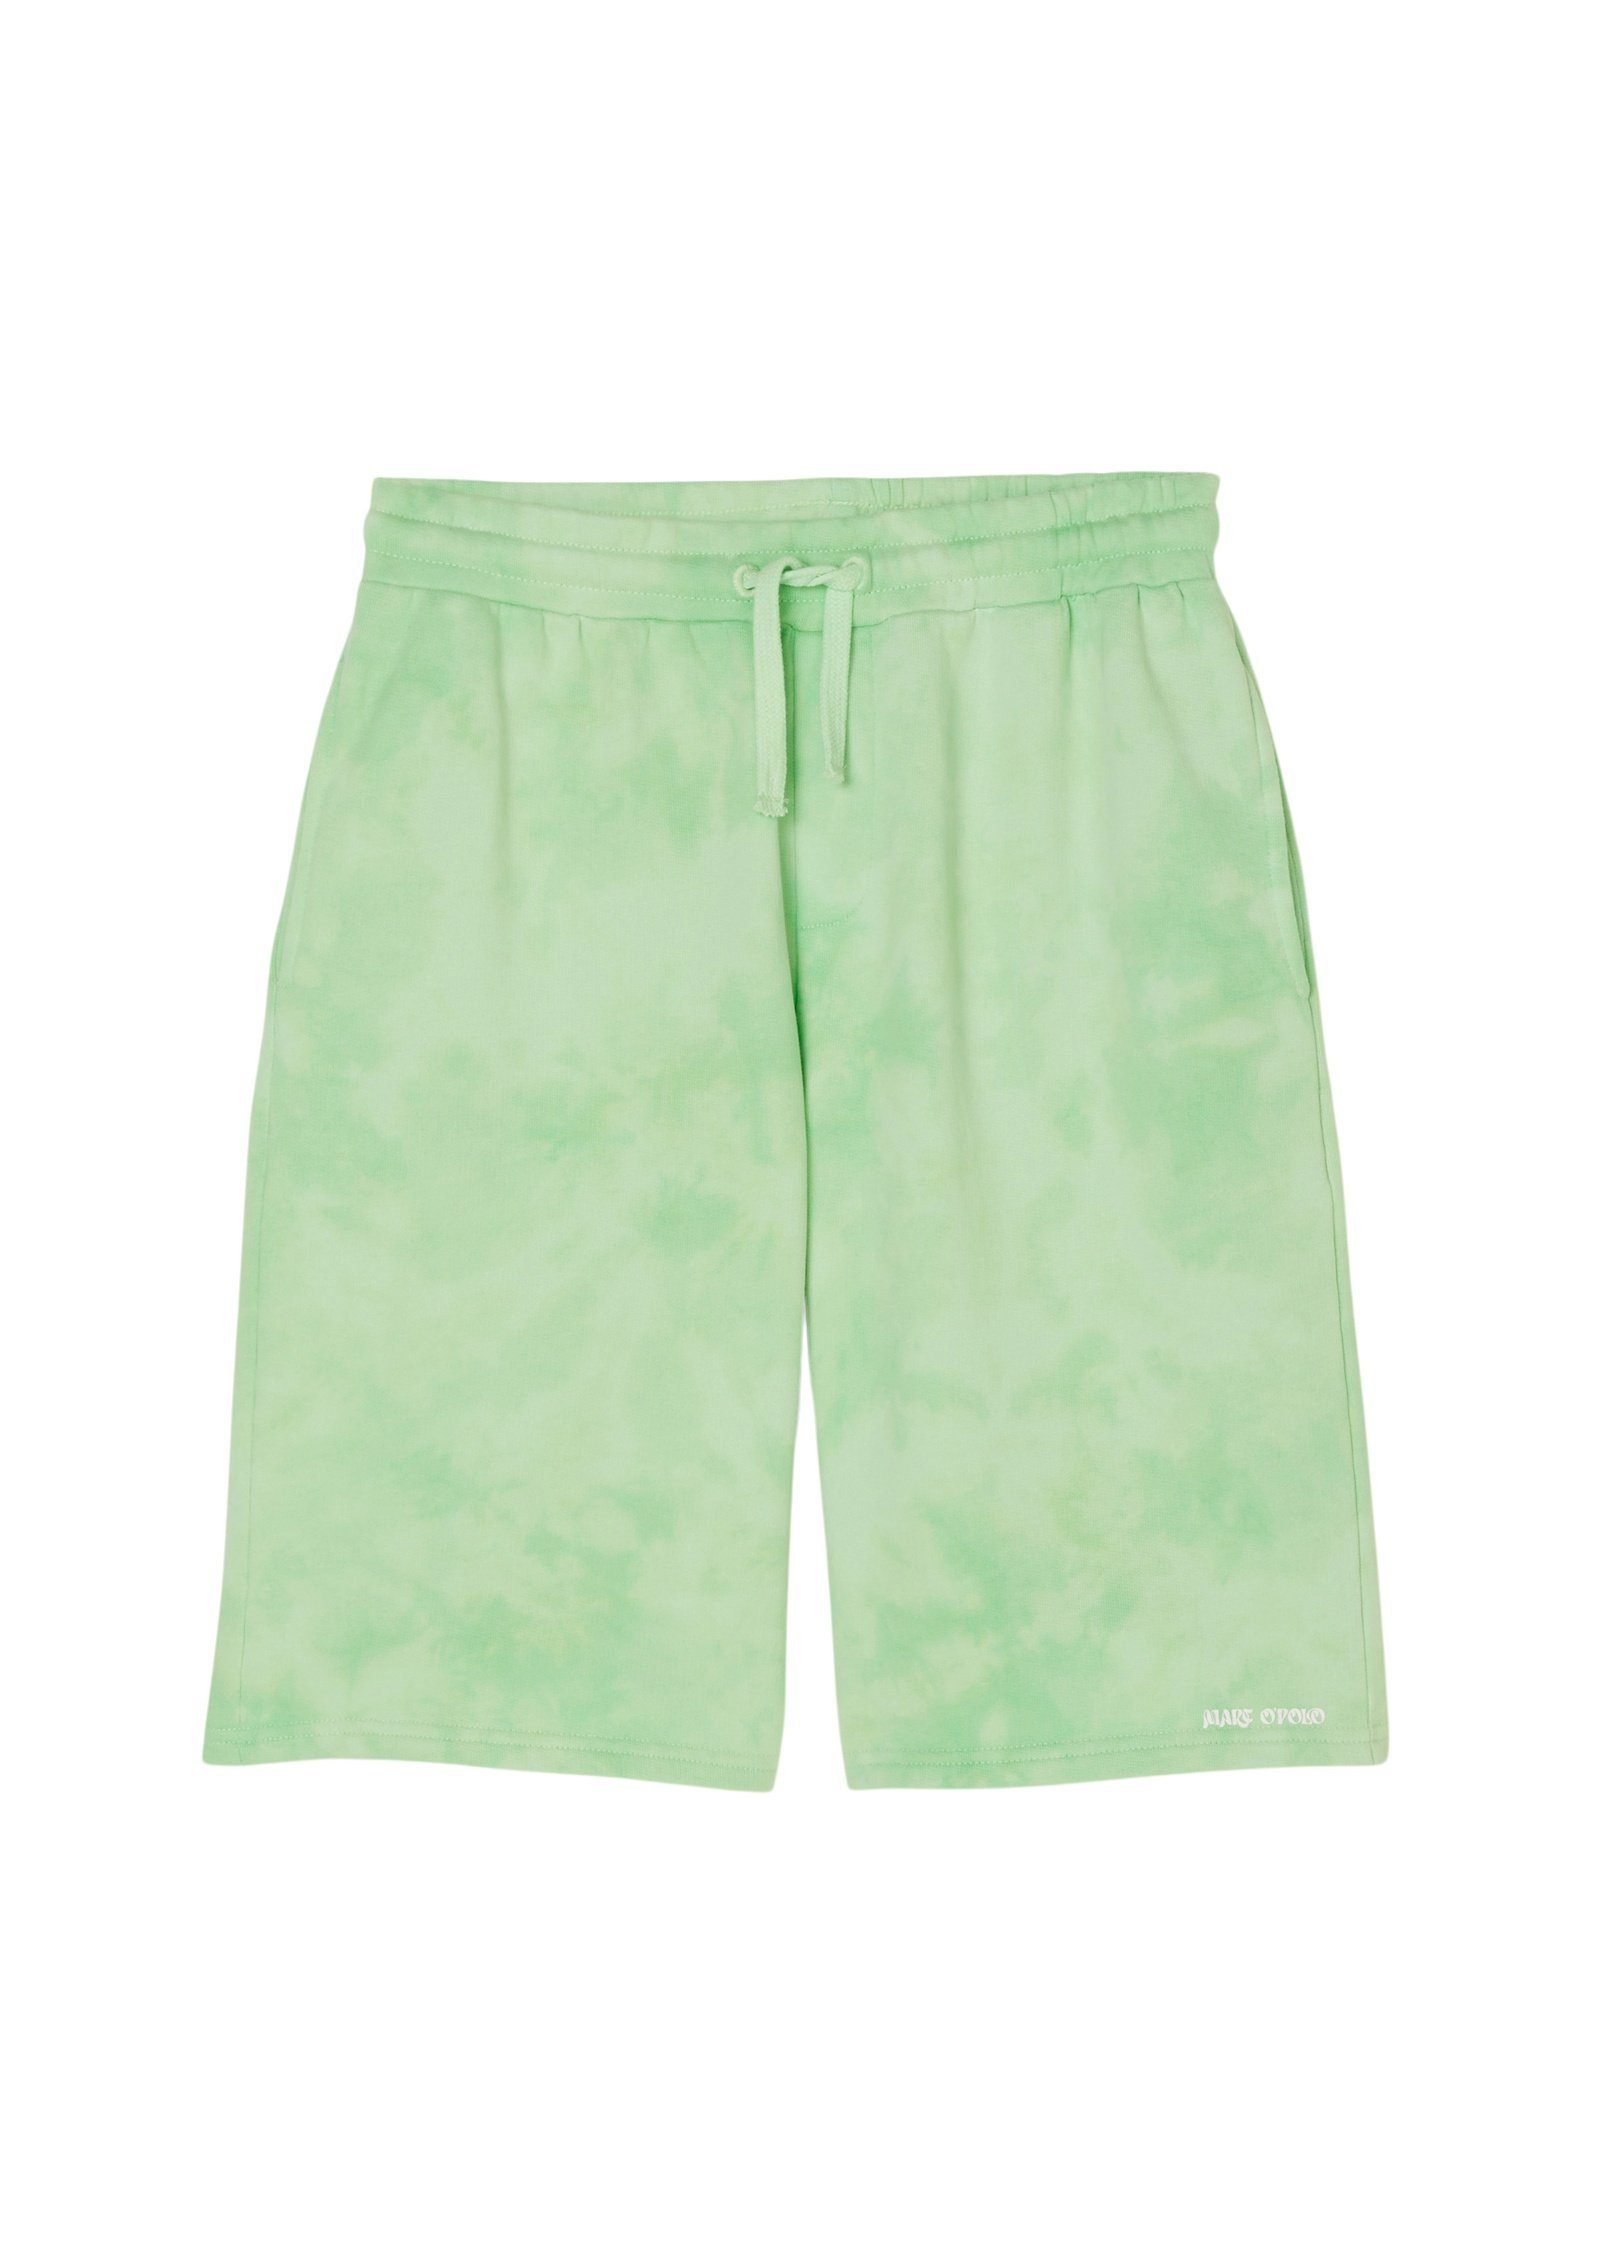 Organic grün aus hochwertigem Marc Cotton O'Polo Shorts